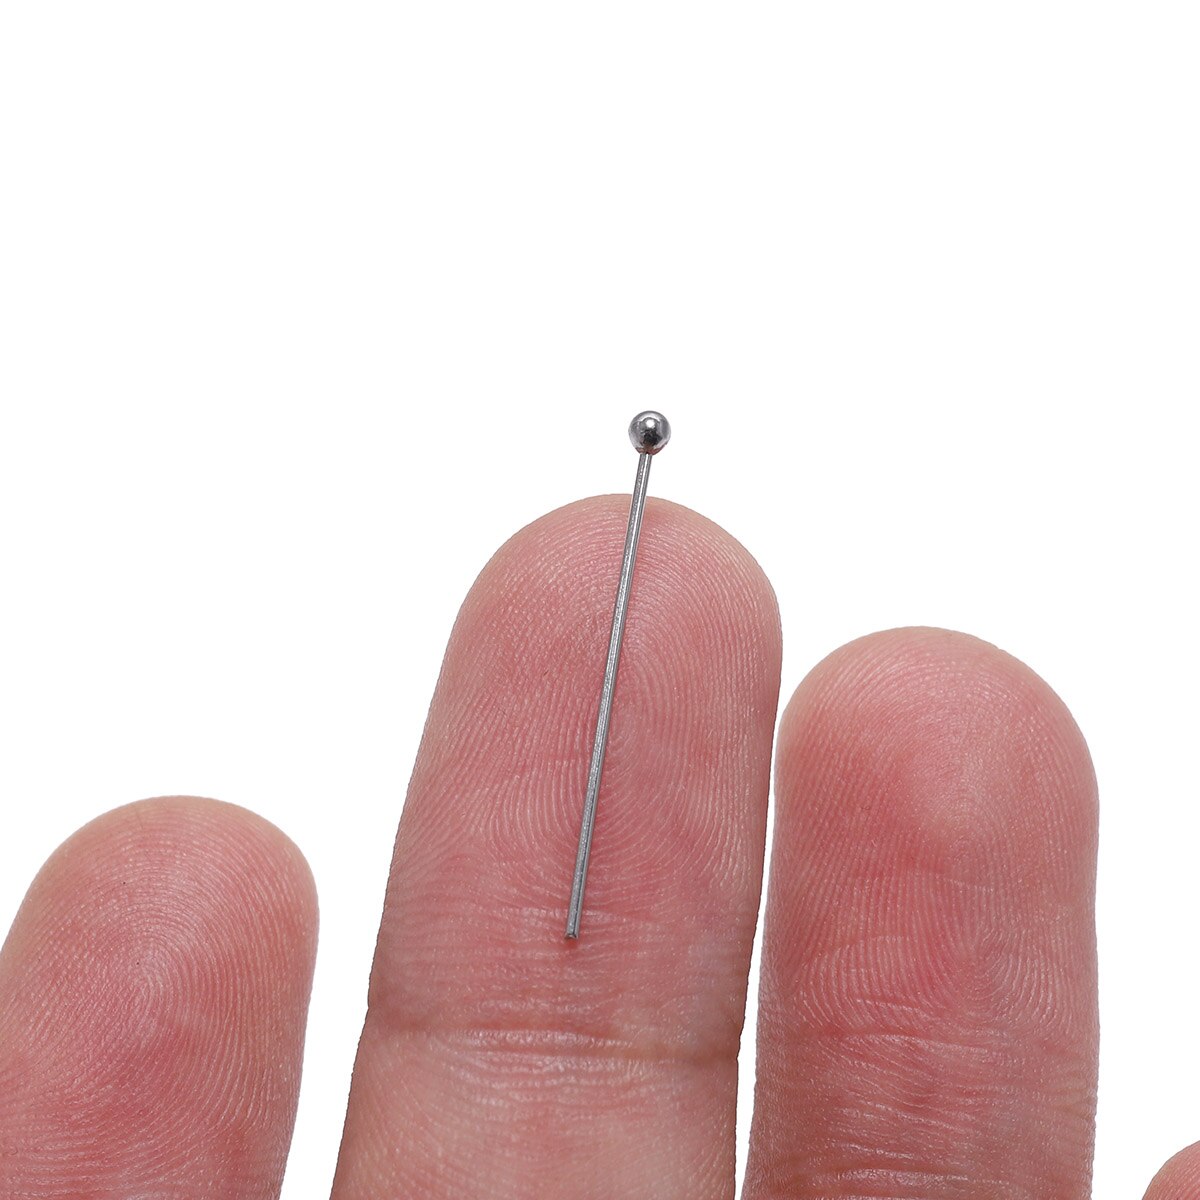 100Pcs/Lot Stainless Steel Headpin - Eye Pins - Flat Head Pins